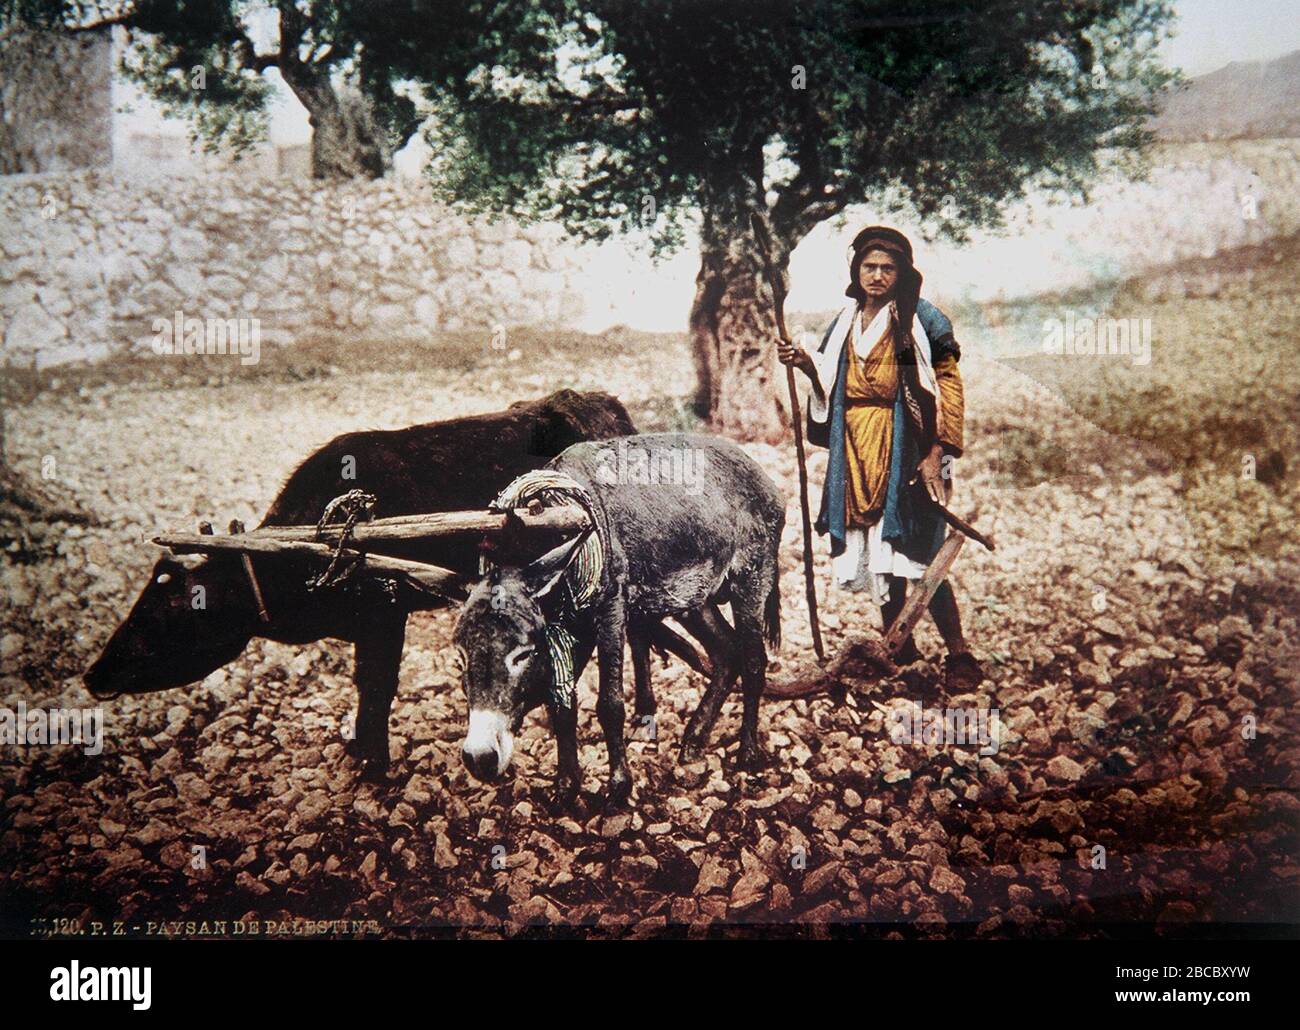 English Arab Woman Using Donkeys To Plow Her Field Color Photo Taken In Late 19th Century By French Photographer Bonfils O U I U E I O U I I U E I I19 C U I U U I O E I O